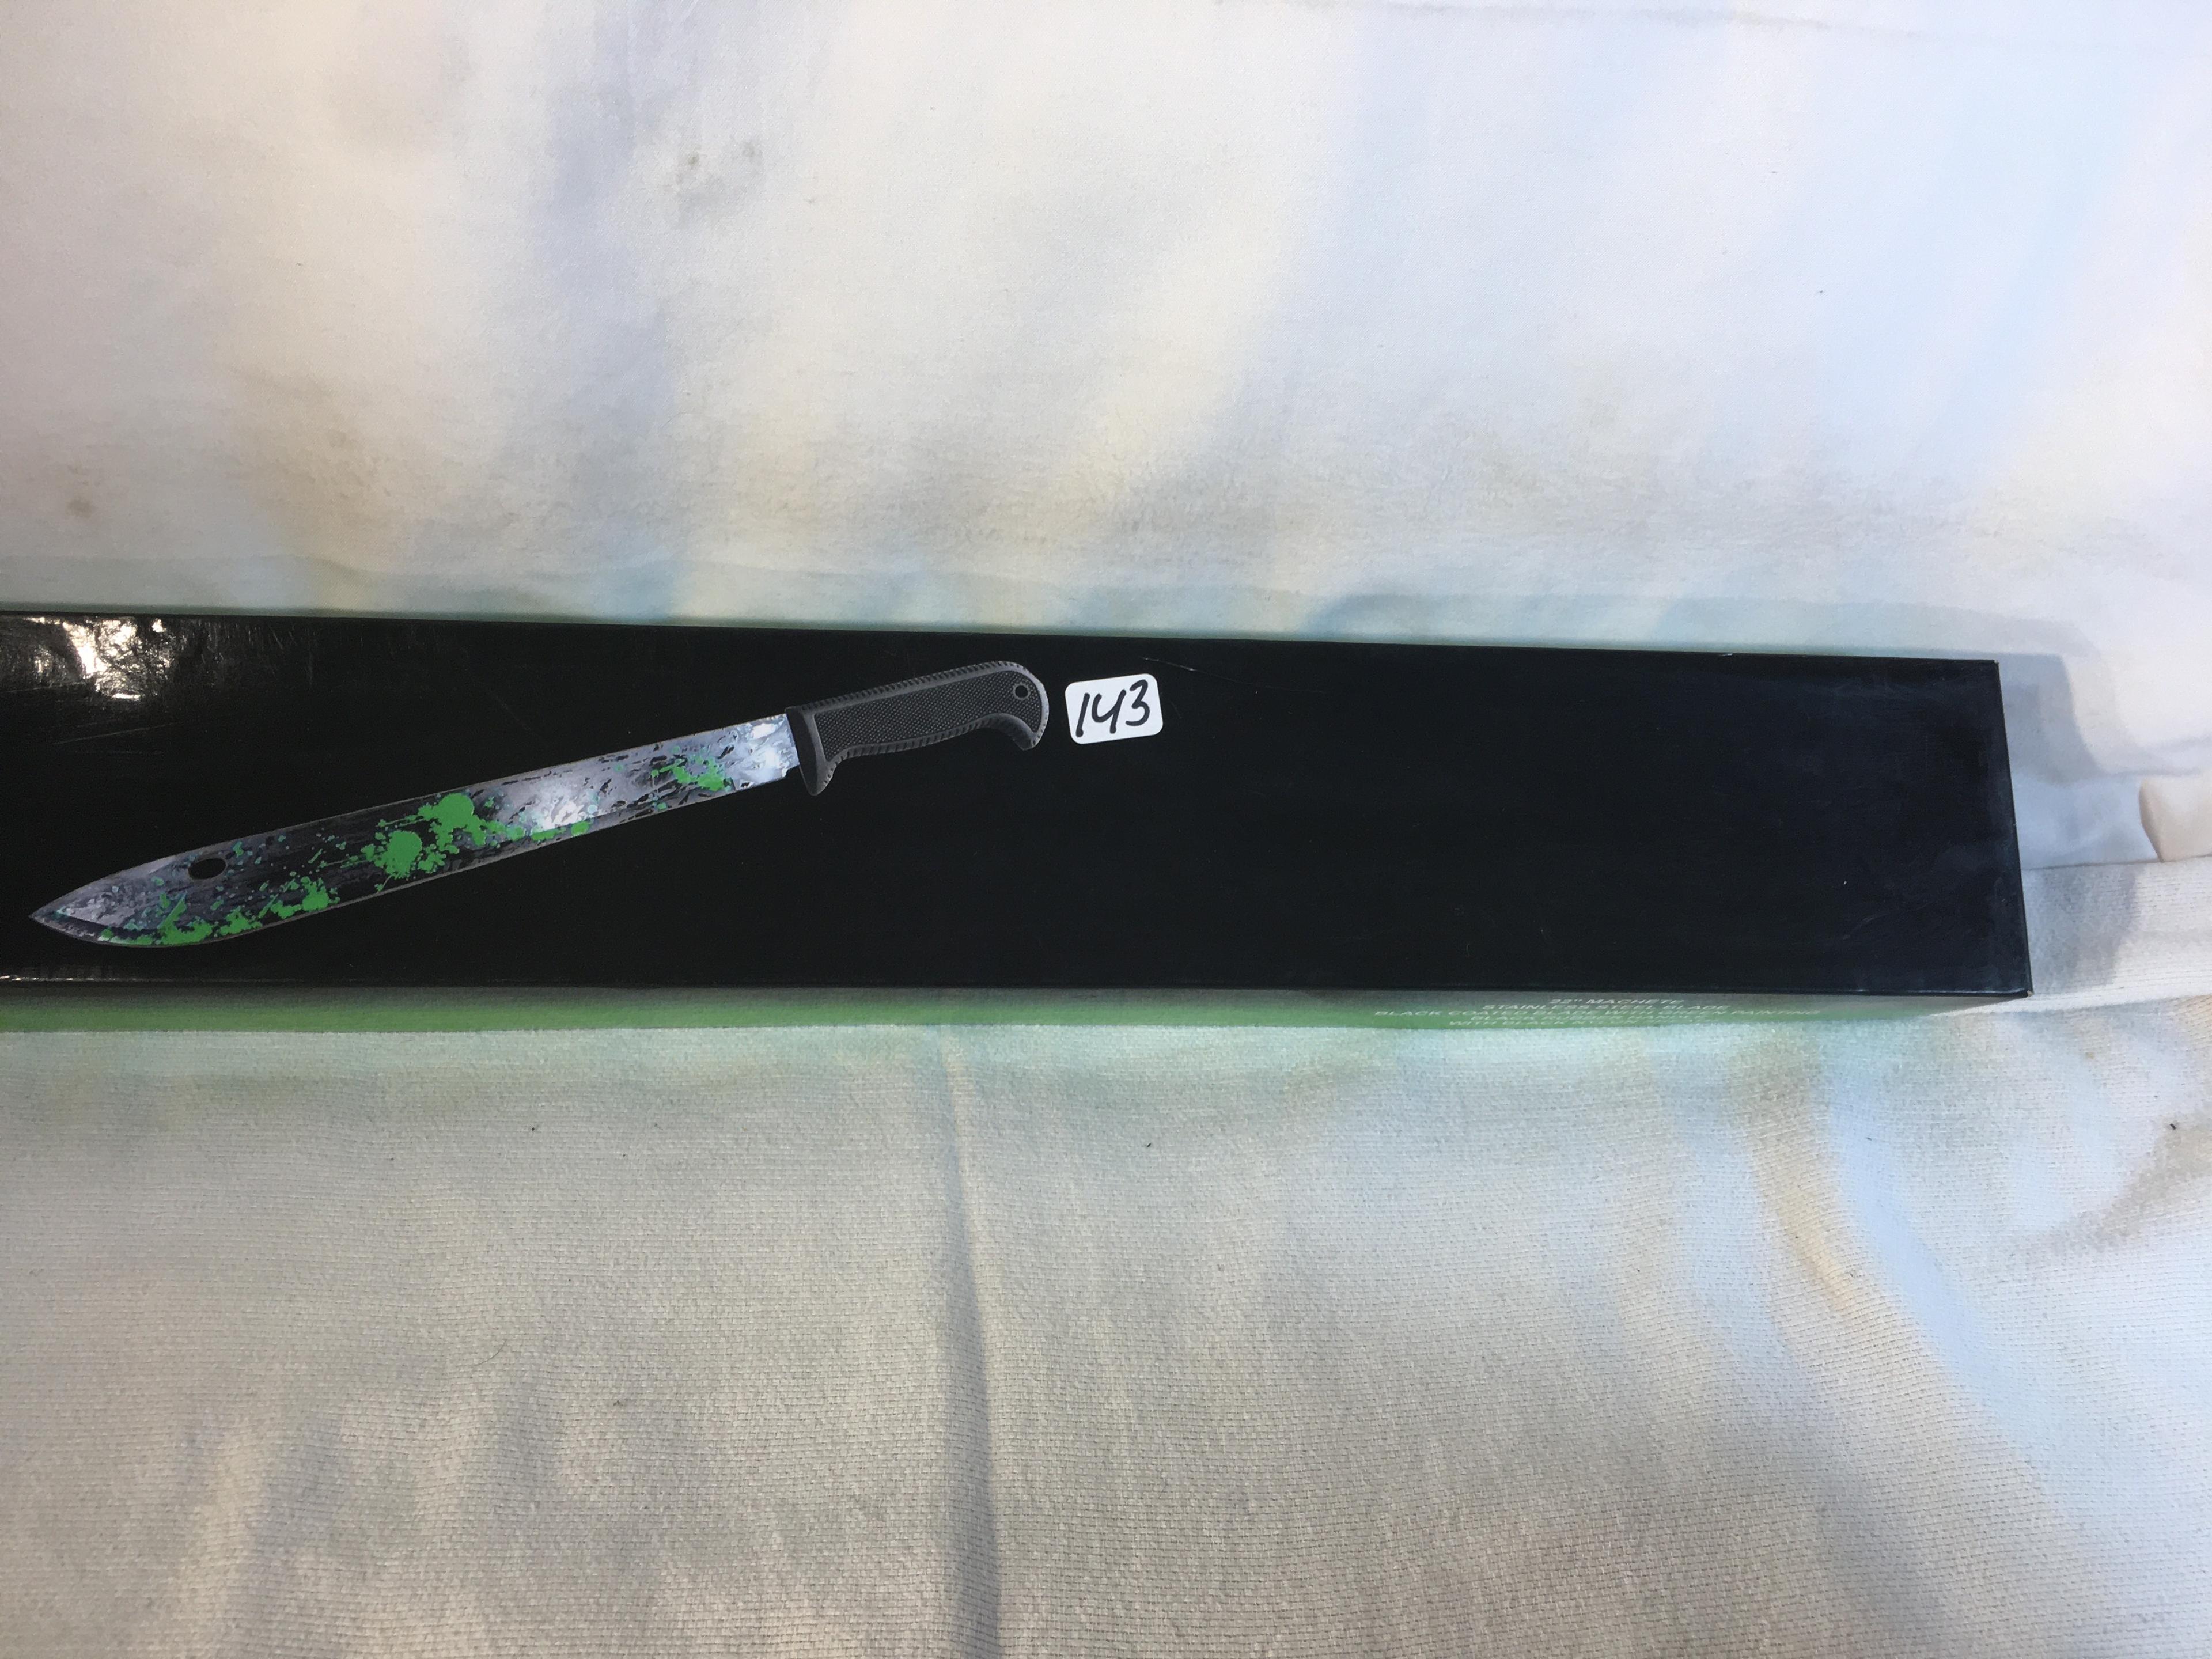 New Collector Tac Assault 18-388 22" Machete Satinless Steel Blade Black Coated Blade W/Green Painti